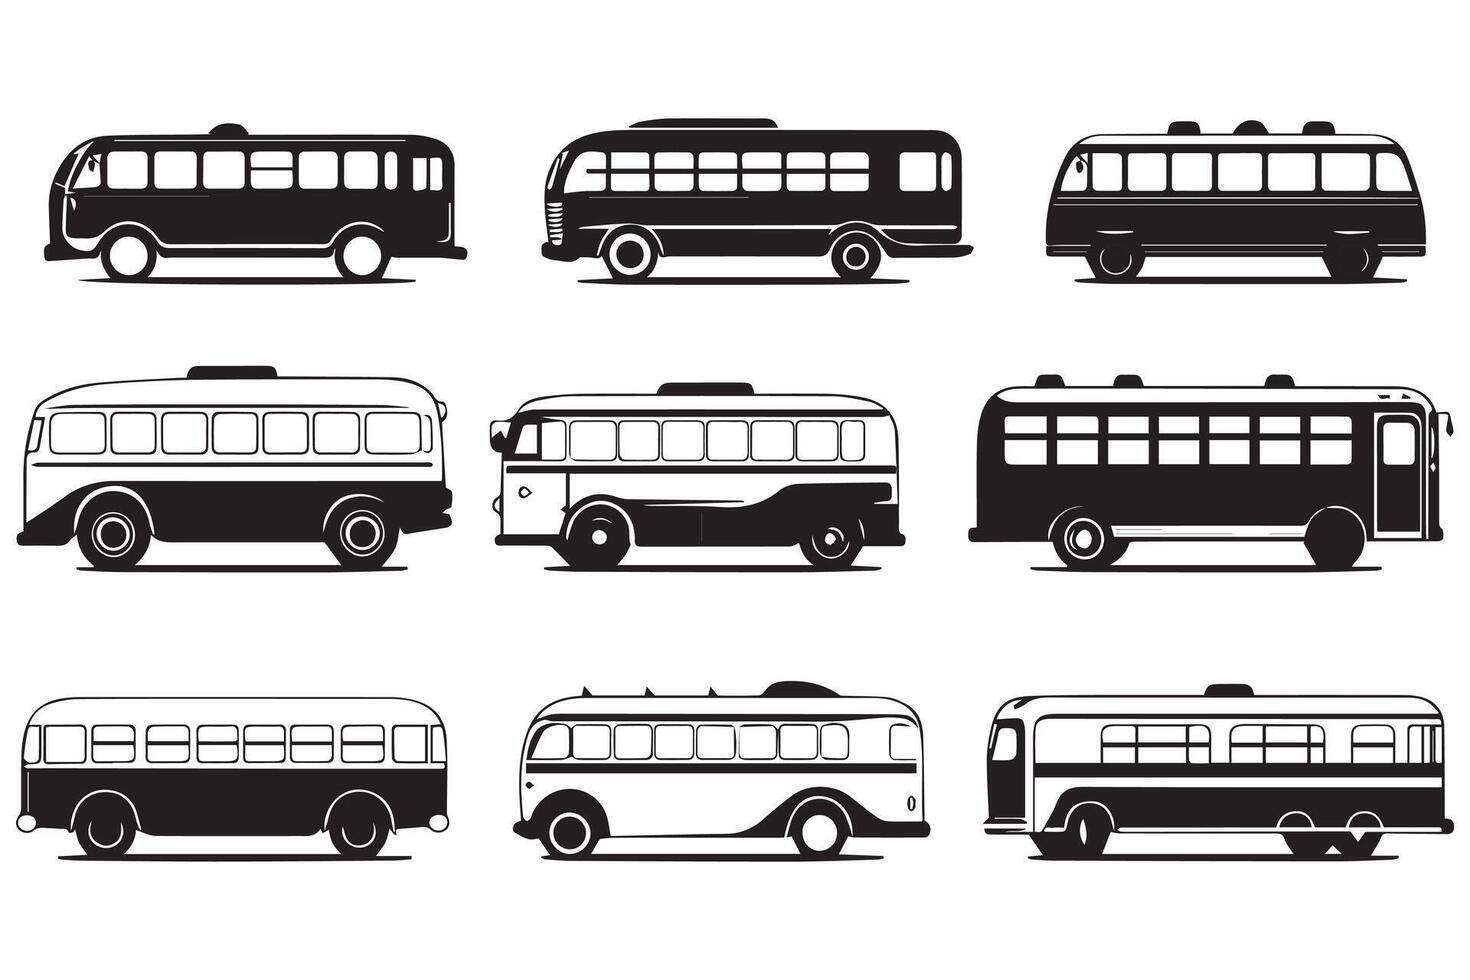 Bus black illustration isolated on white background. Hand drawn illustration vector